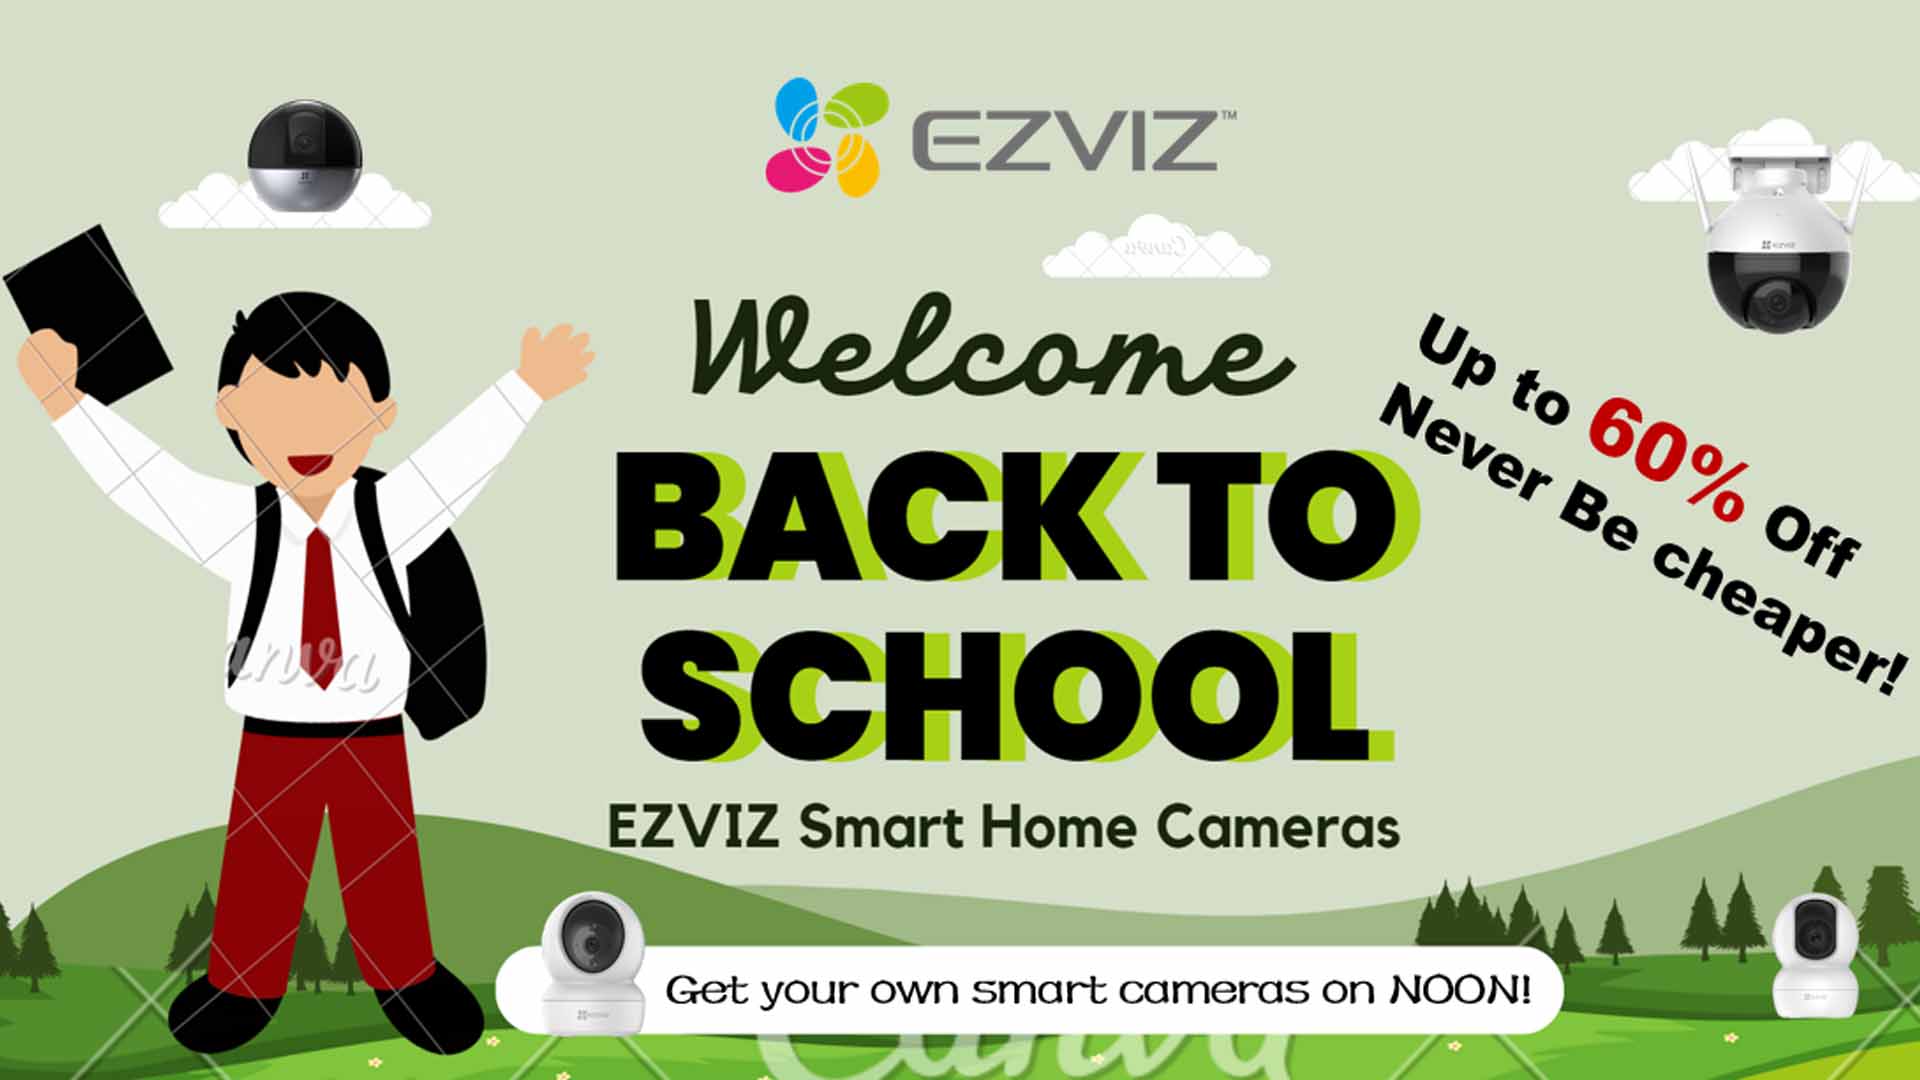 EZVIZ Celebrates Back to School Season in Saudi Arabia with Eco-Friendly Promotions and Global Green Initiatives